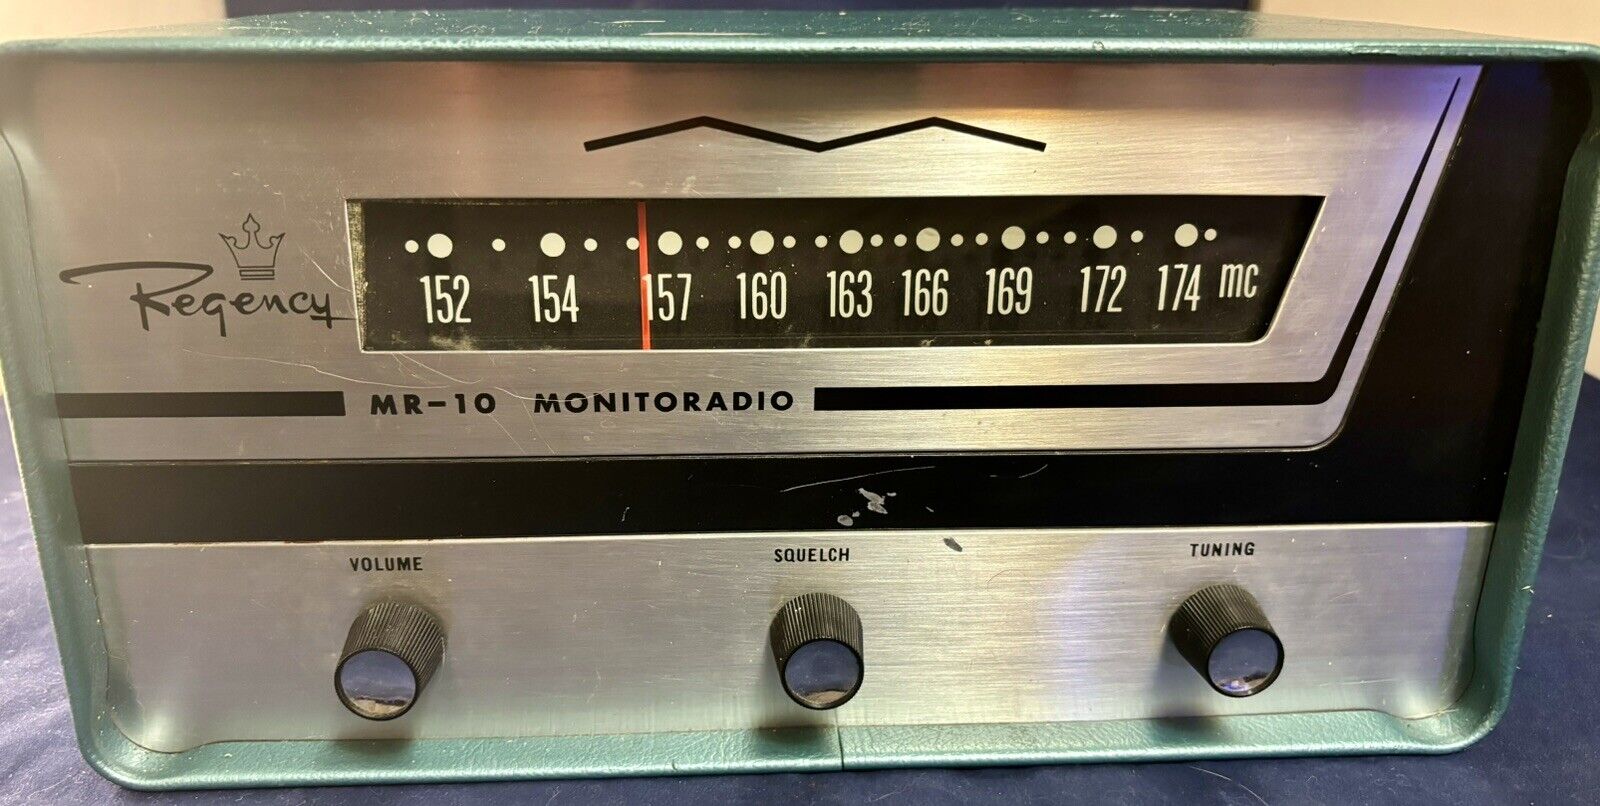 Vintage Regency MR-10 Monitoradio Tube Radio Receiver in Aqua Blue